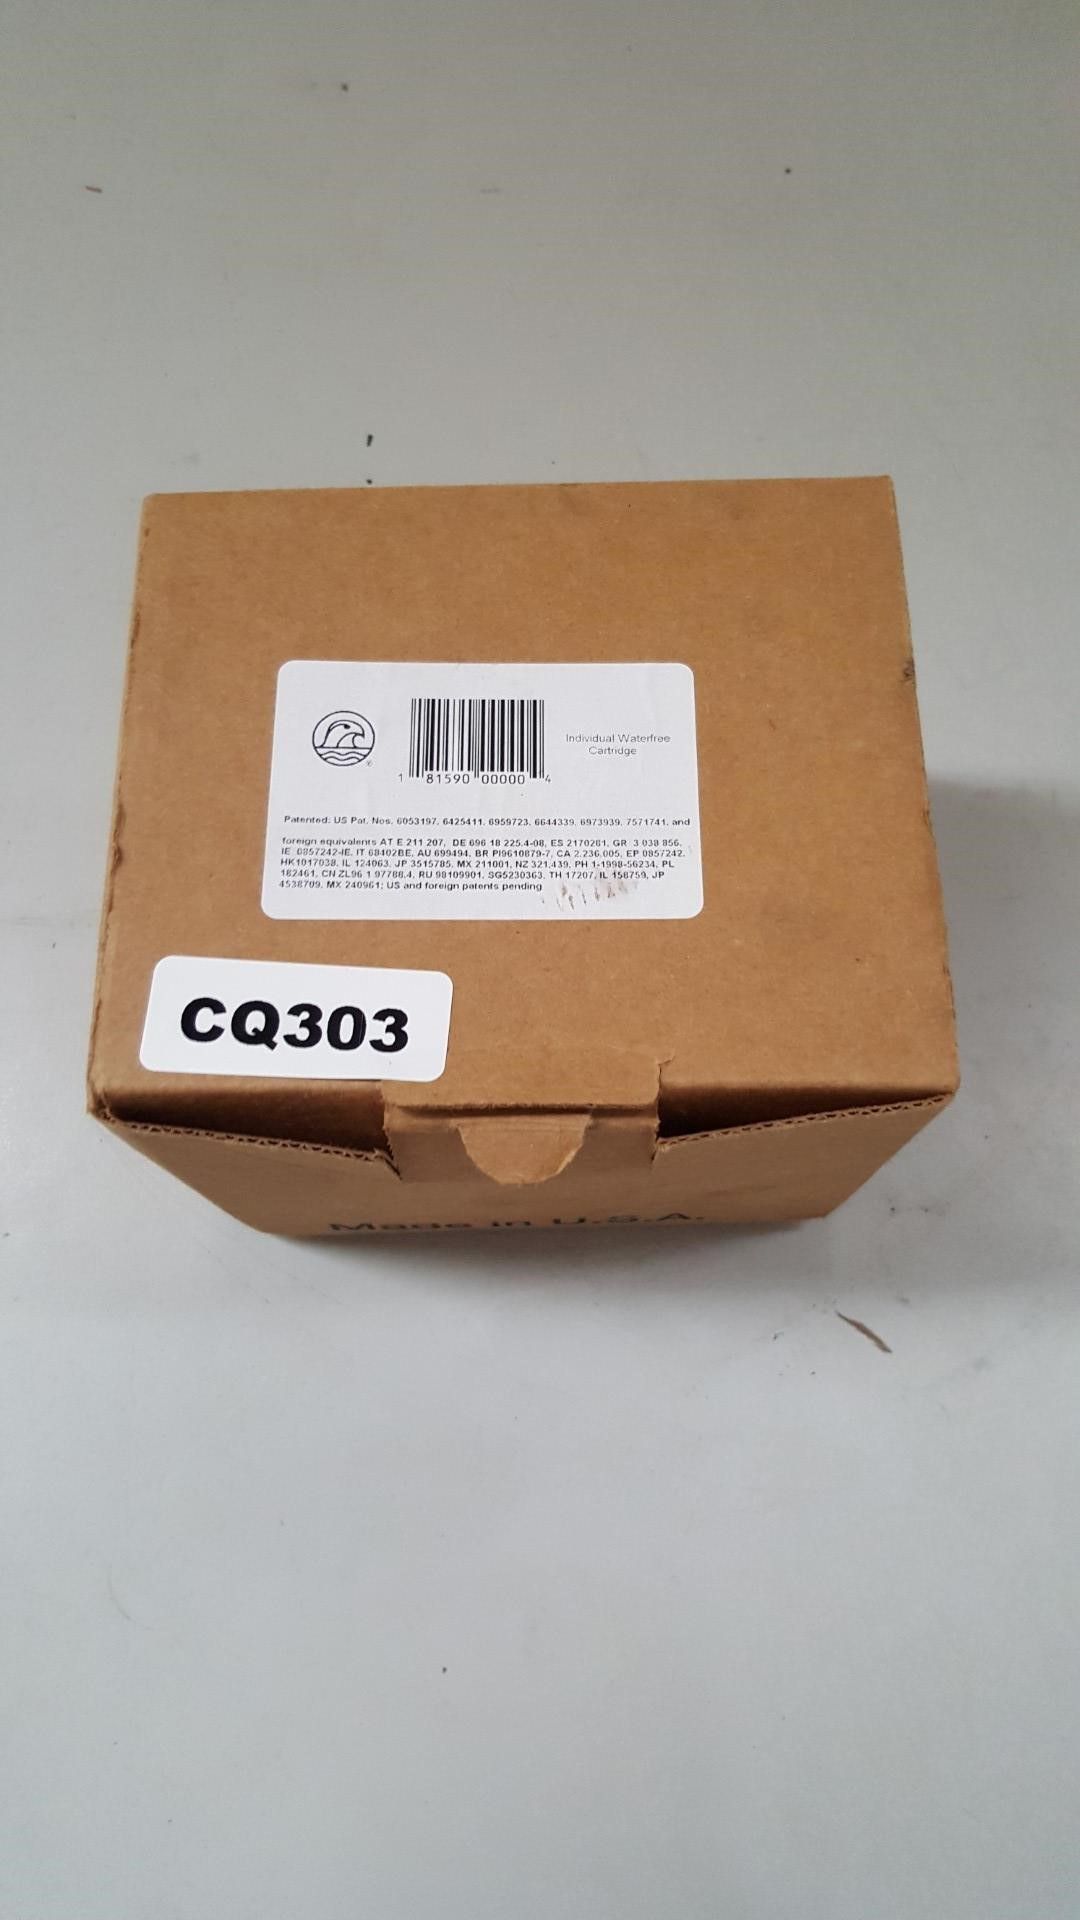 1 x Falcon Cartridge Urinal Filter Change - Ref CQ303 - Image 2 of 3